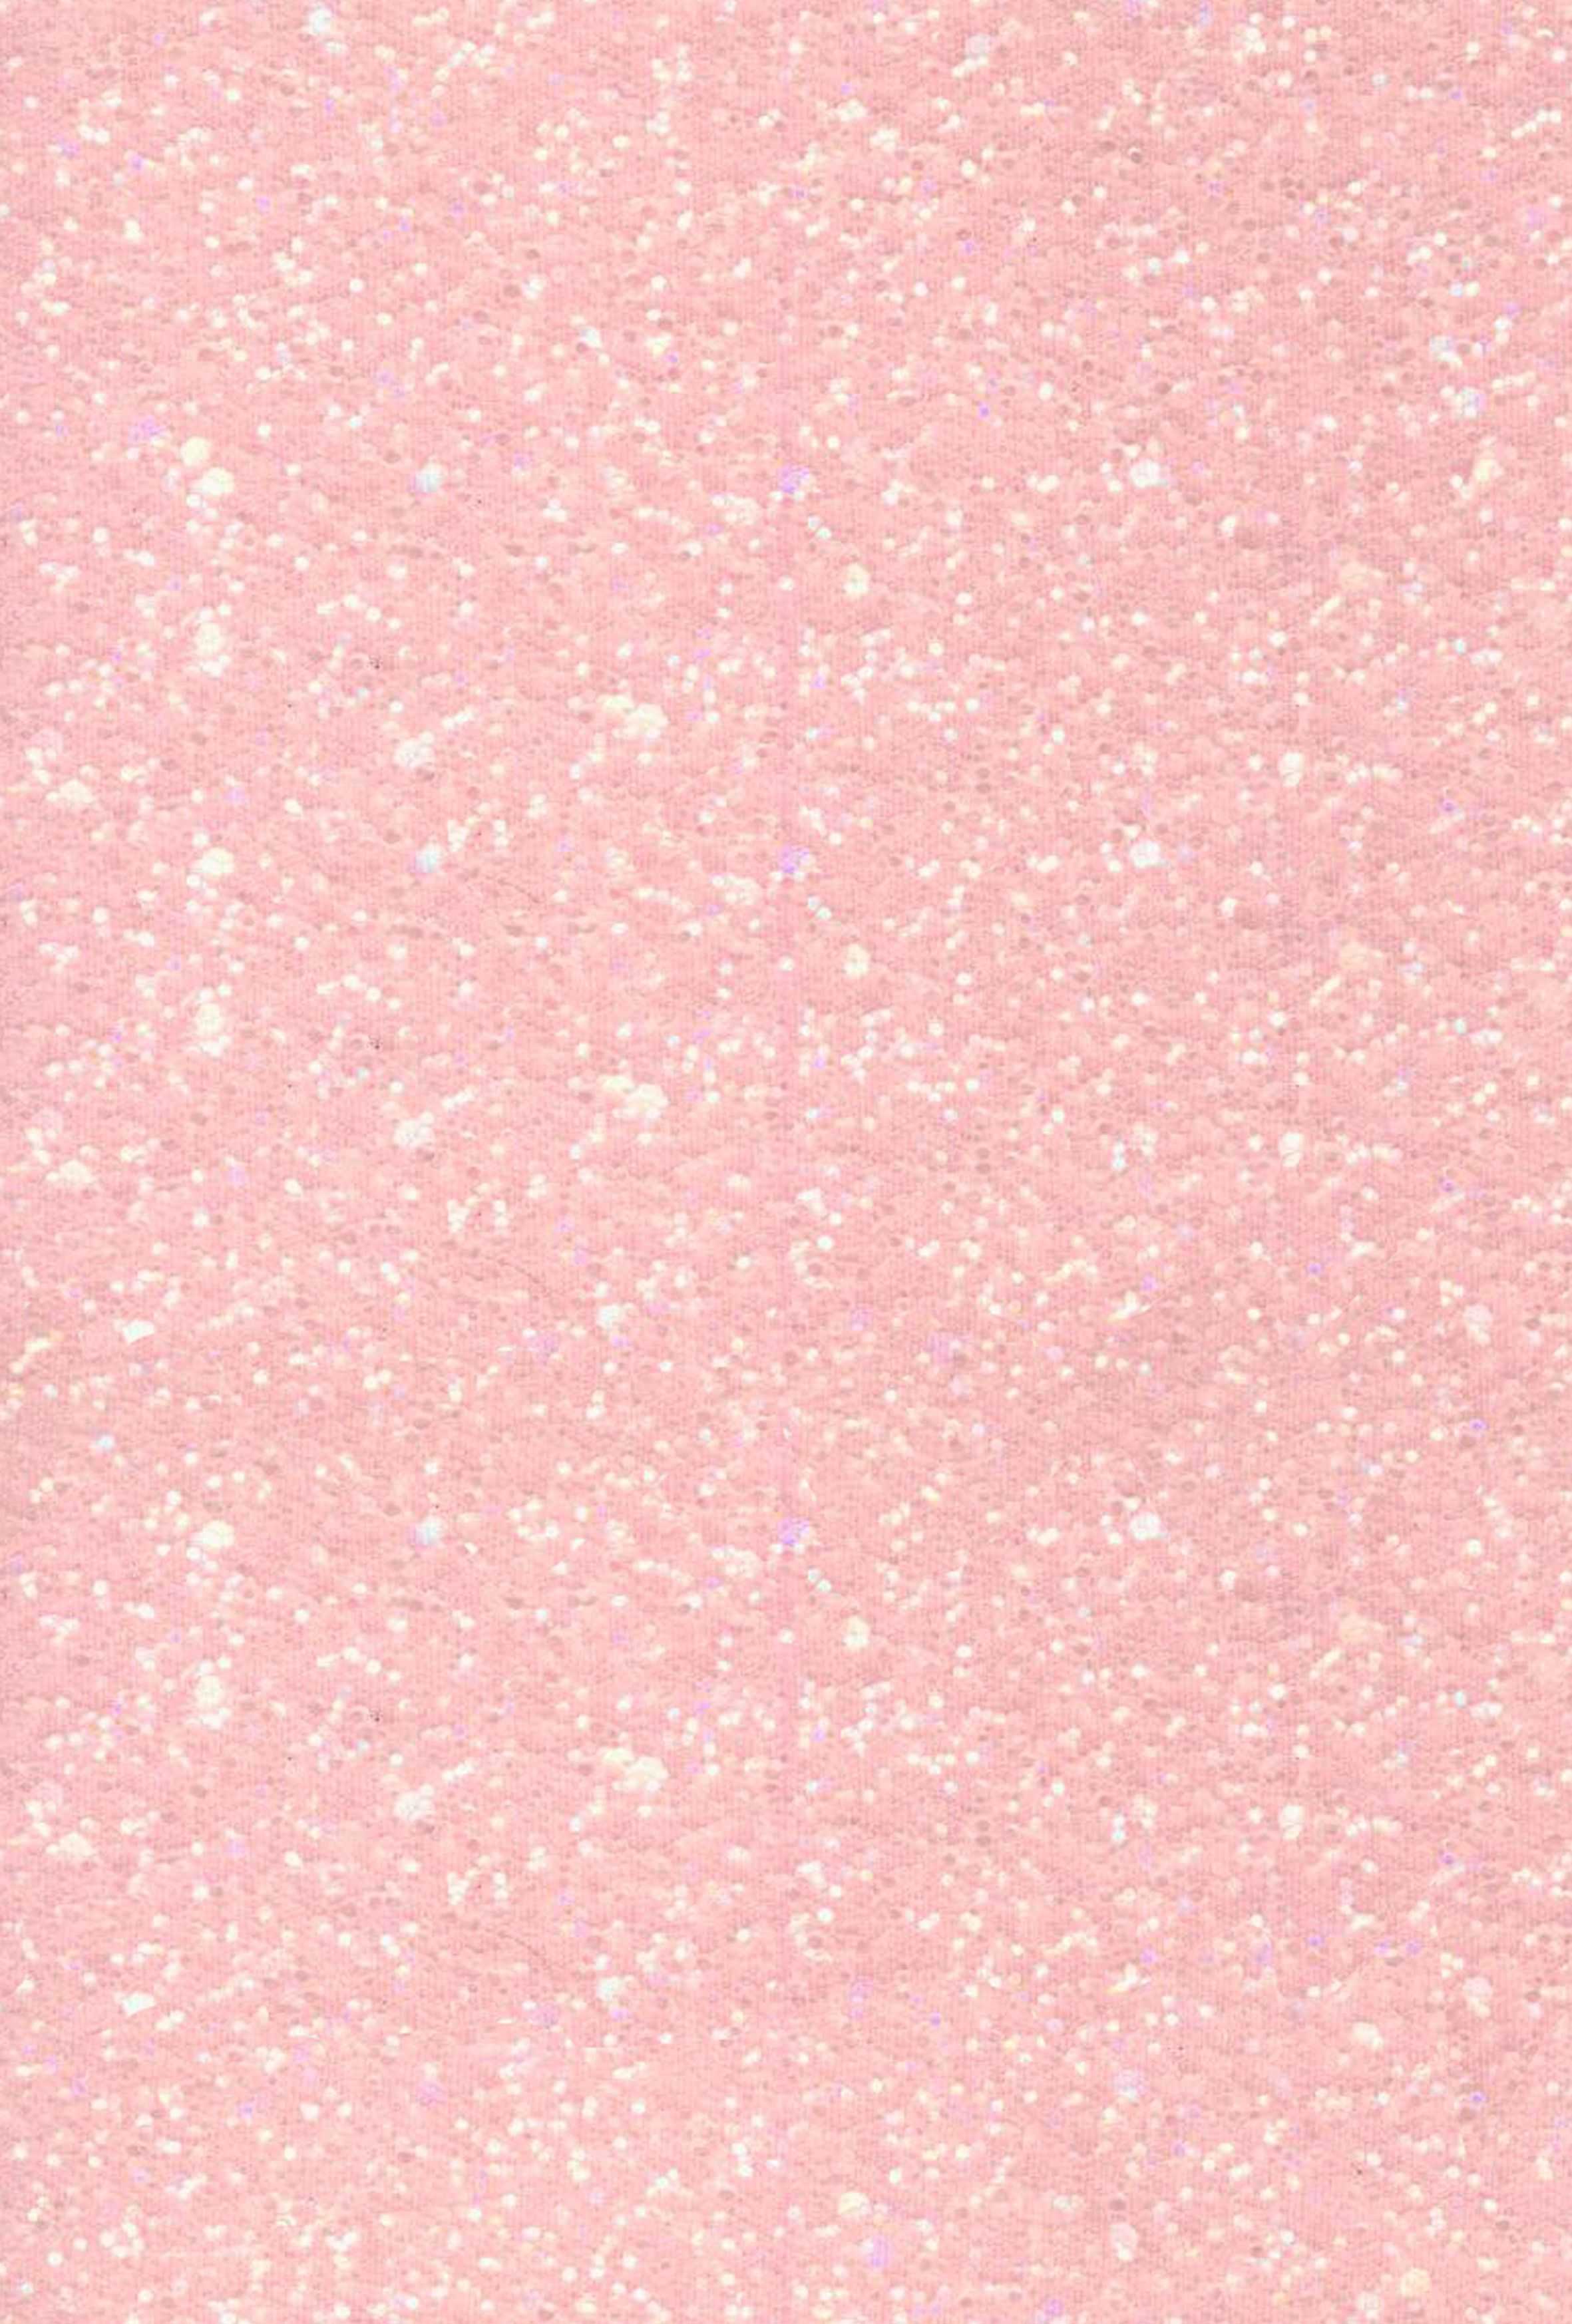 Light Pink Wallpaper - NawPic